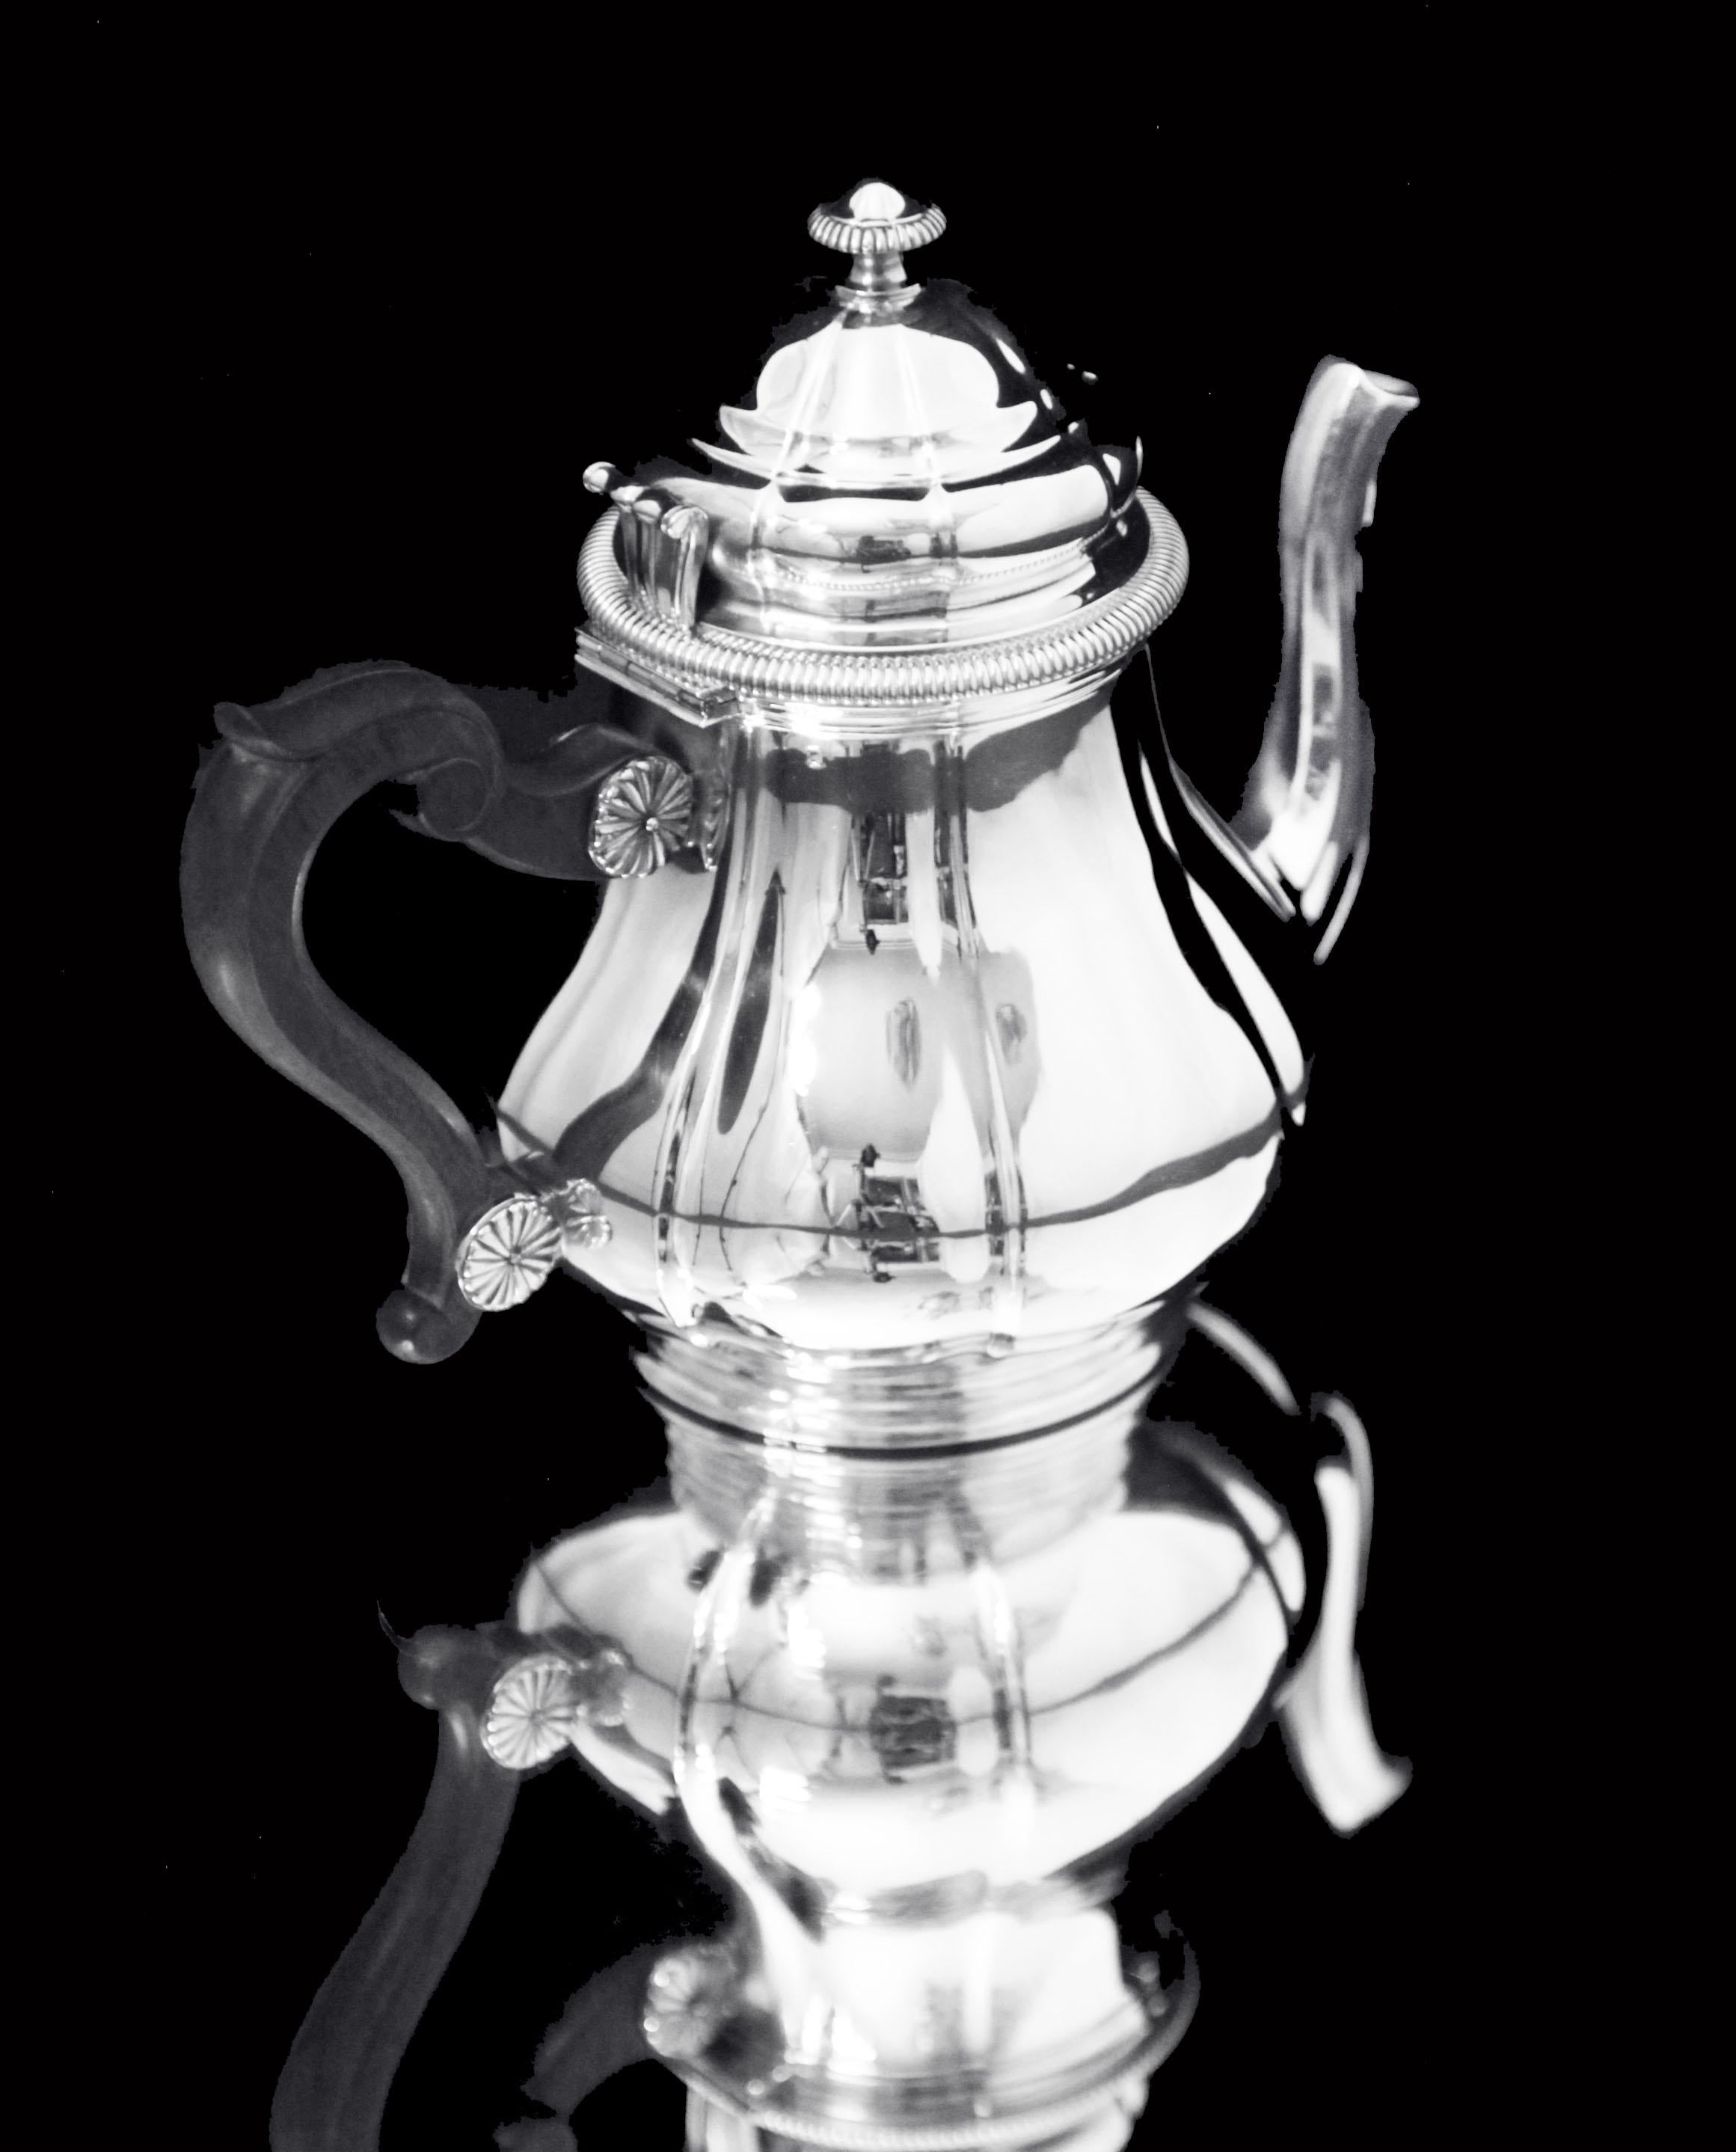 Boin-Taburet & Faberge, - 8pc. 950 Sterling Tea Set + 6 Faberge Espresso Cups For Sale 2